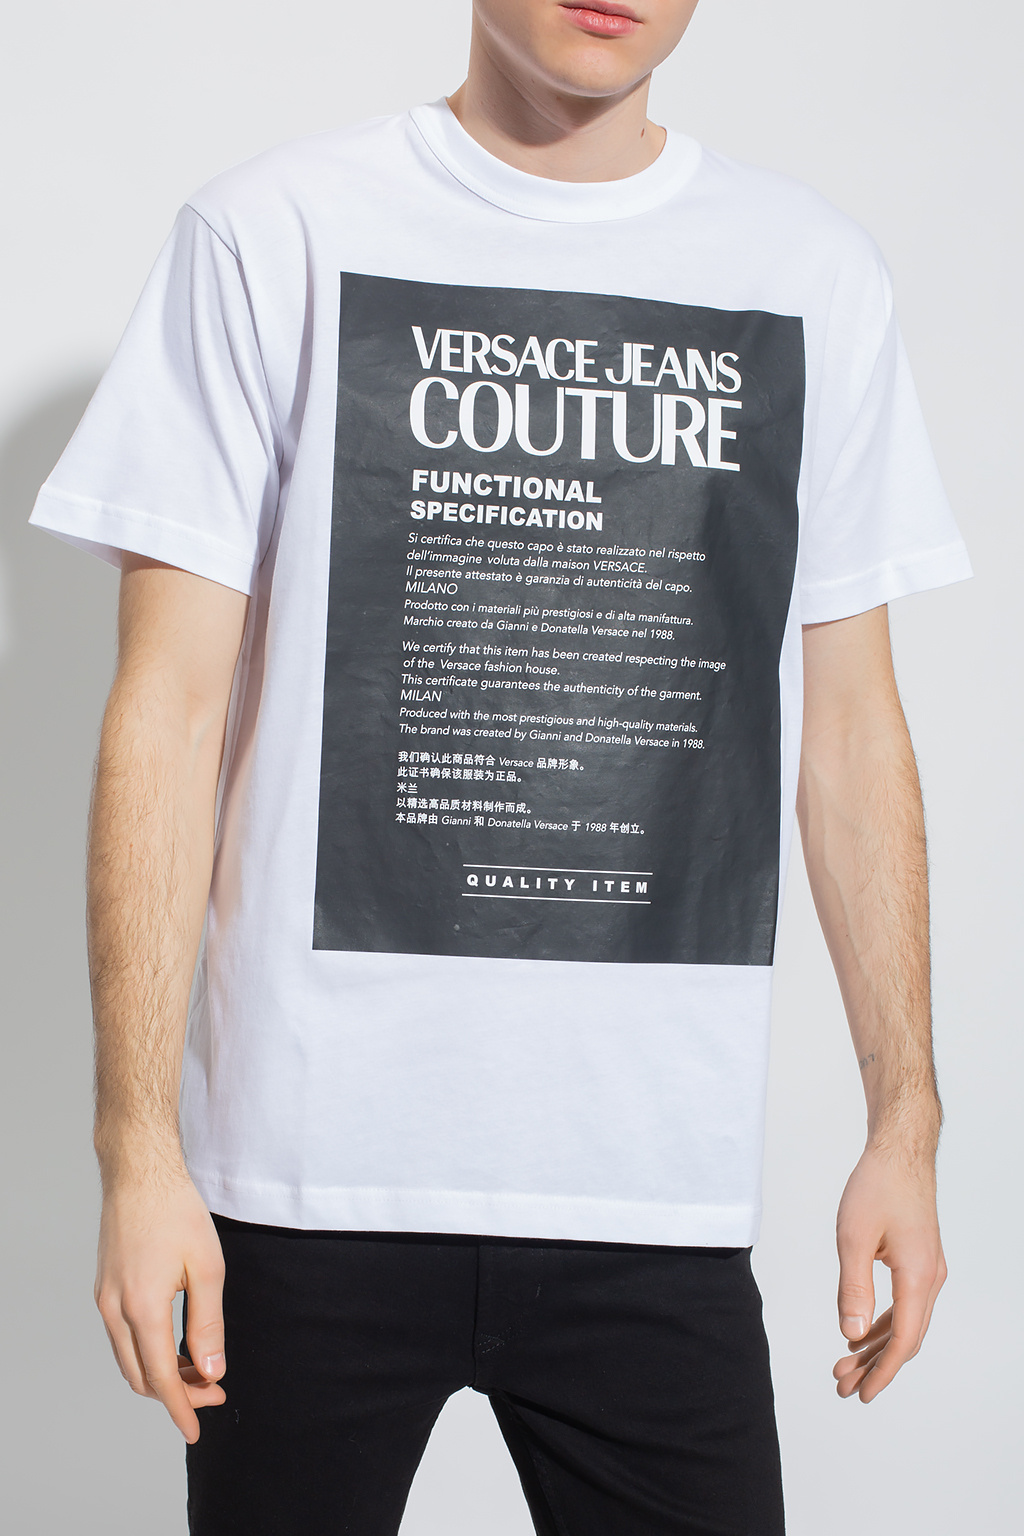 Gianni Versace Grey Baseball Jersey Clothes Sport For Men Women